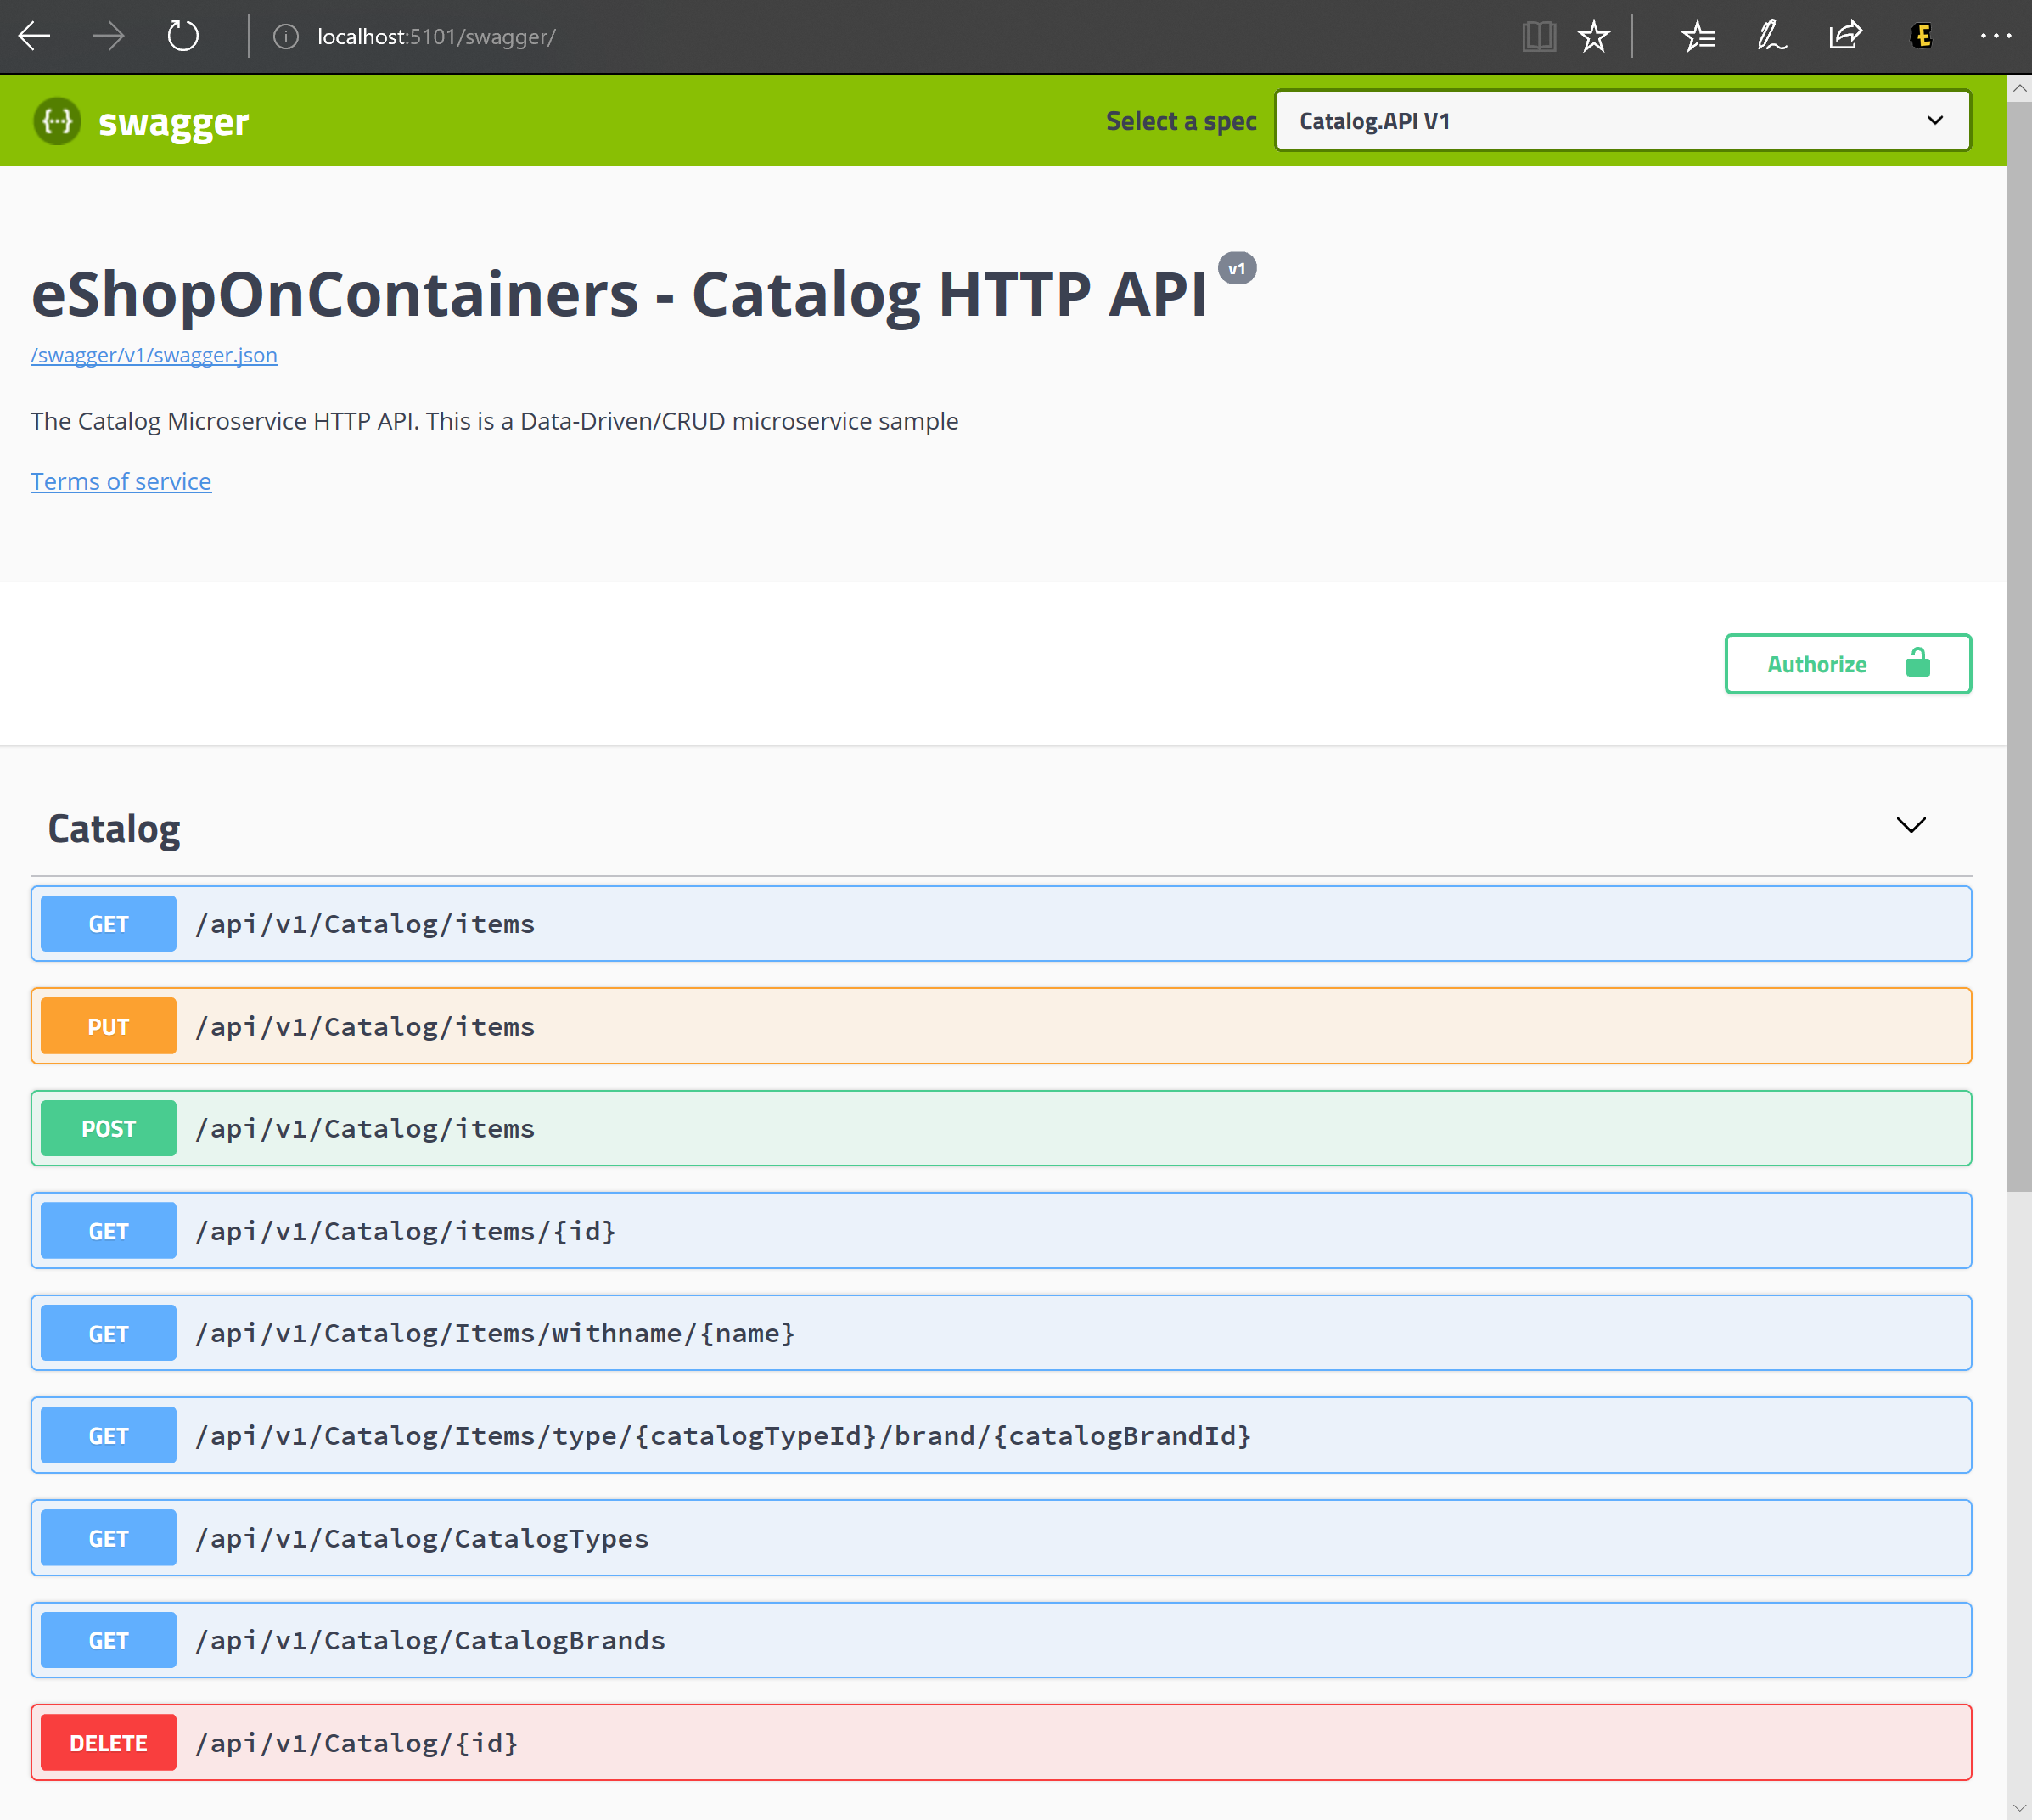 Screenshot of Swagger UI showing the Catalog.API REST API.